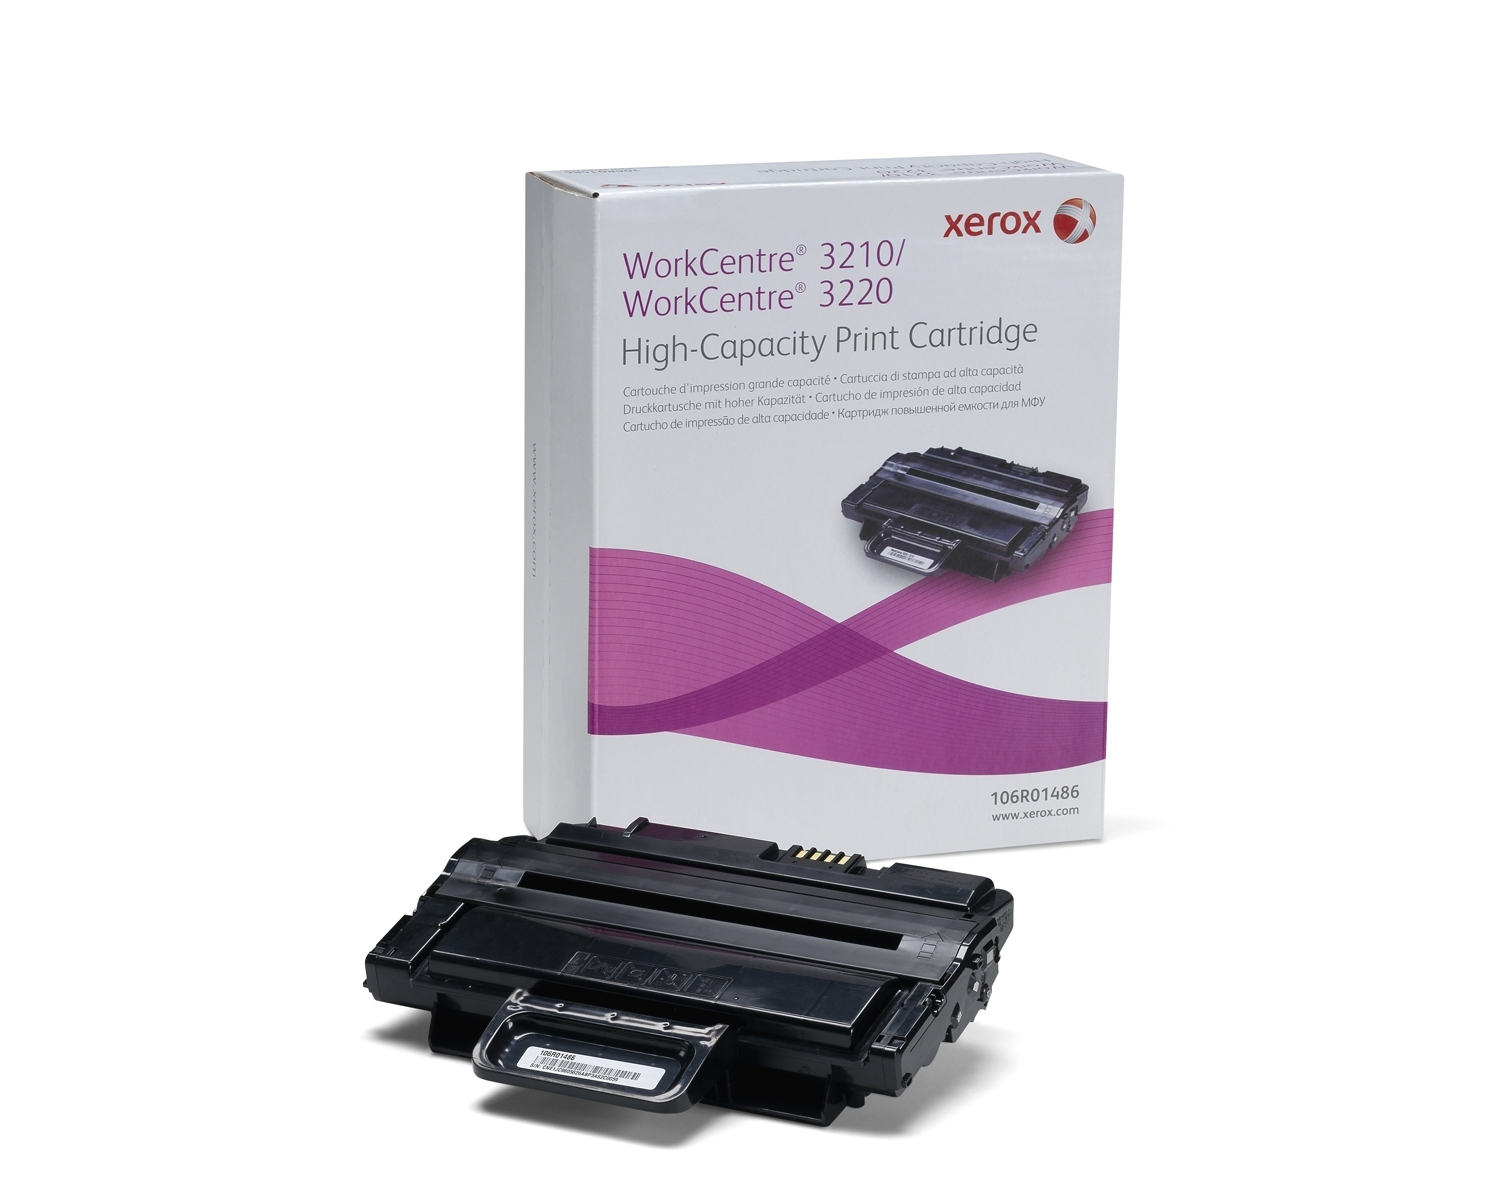 Xerox High Capacity Print Cartridge (4100 pages)